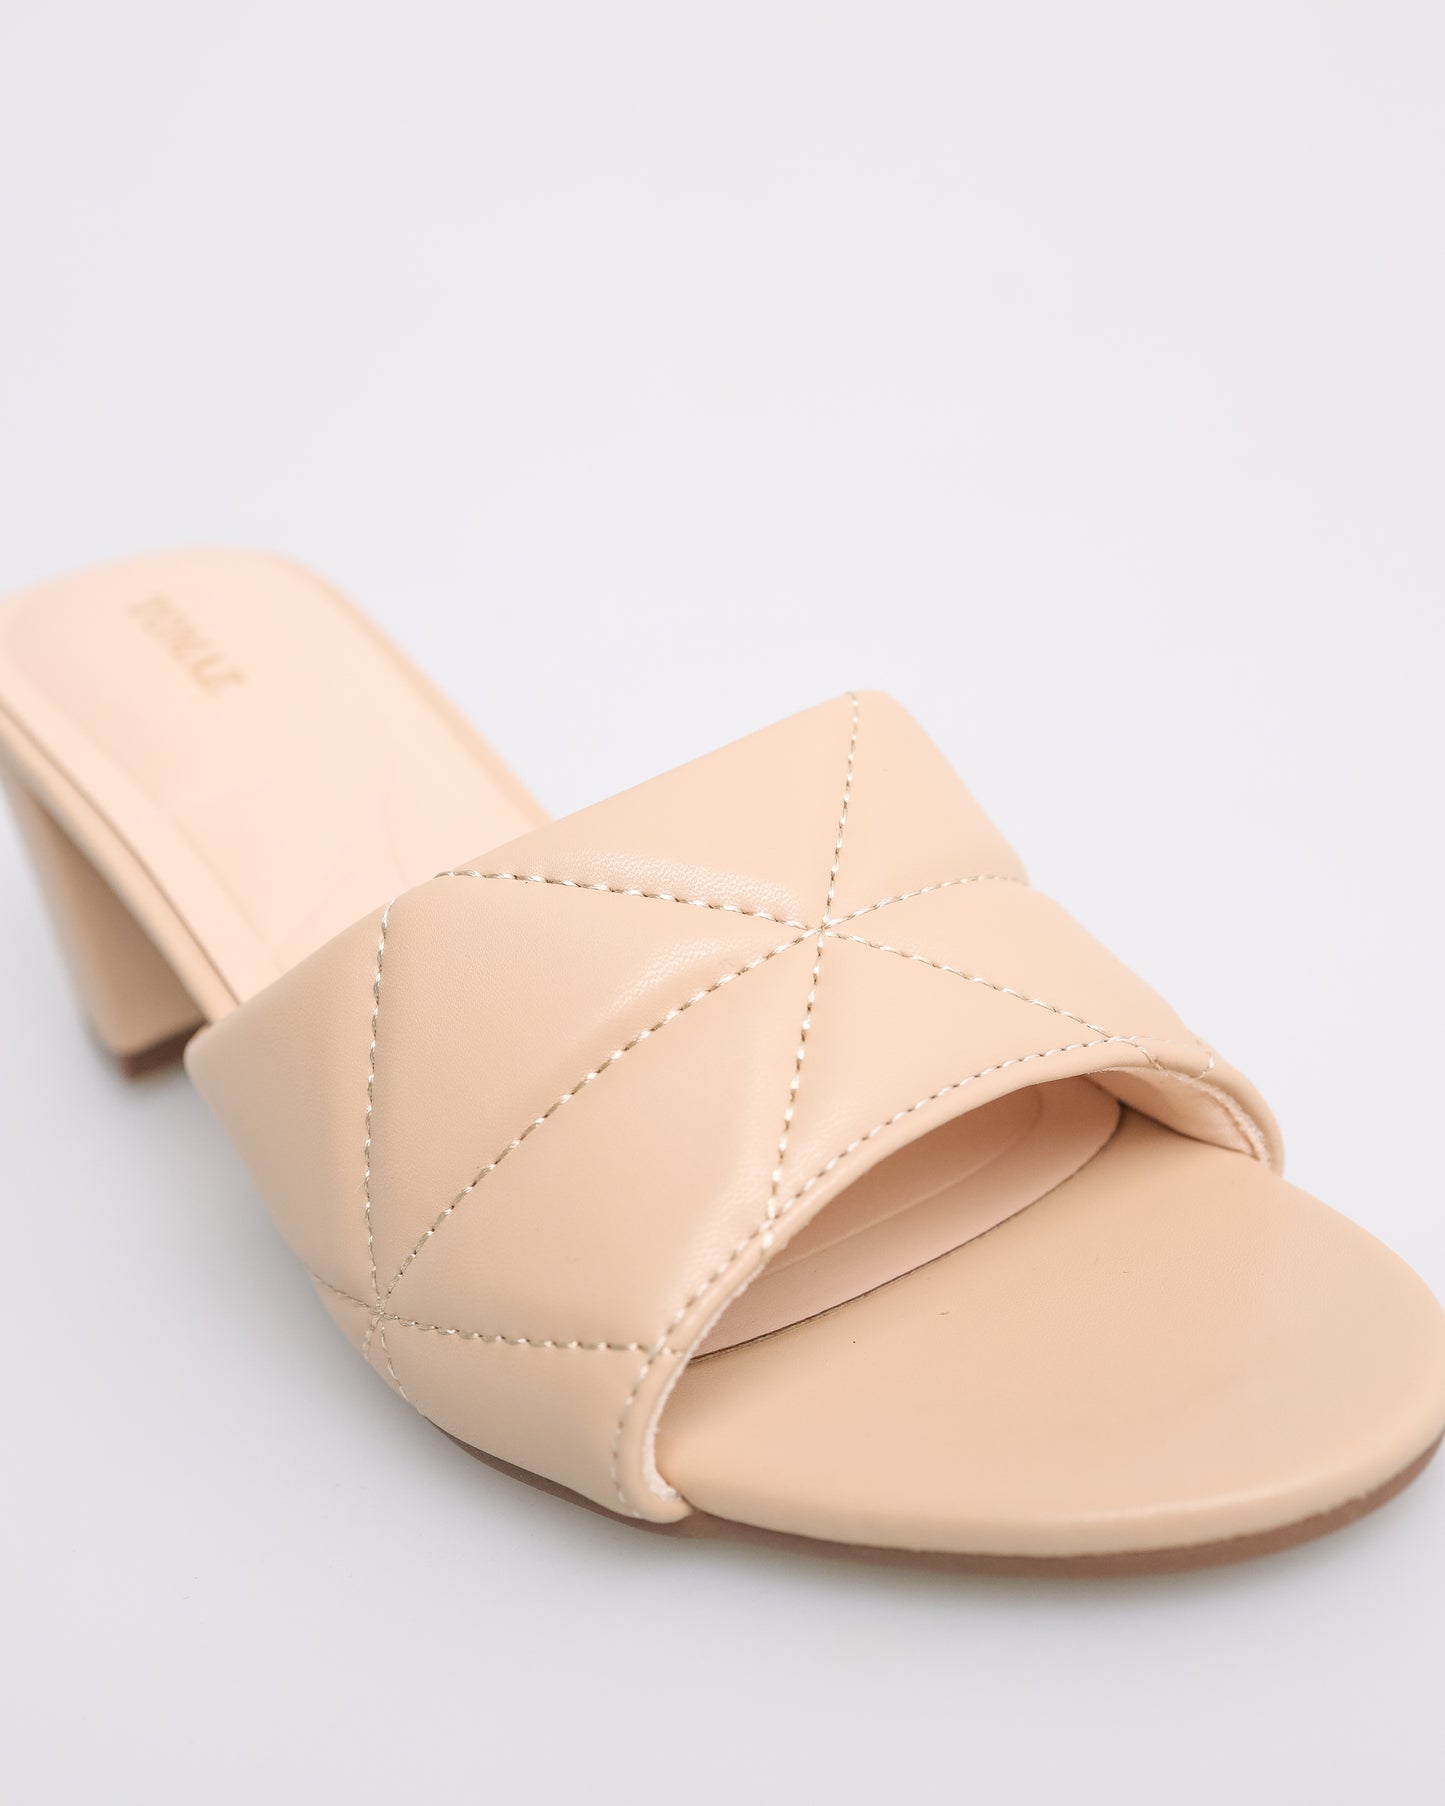 Tomaz NN210 Ladies Quilted Leather Block Heels (Beige)